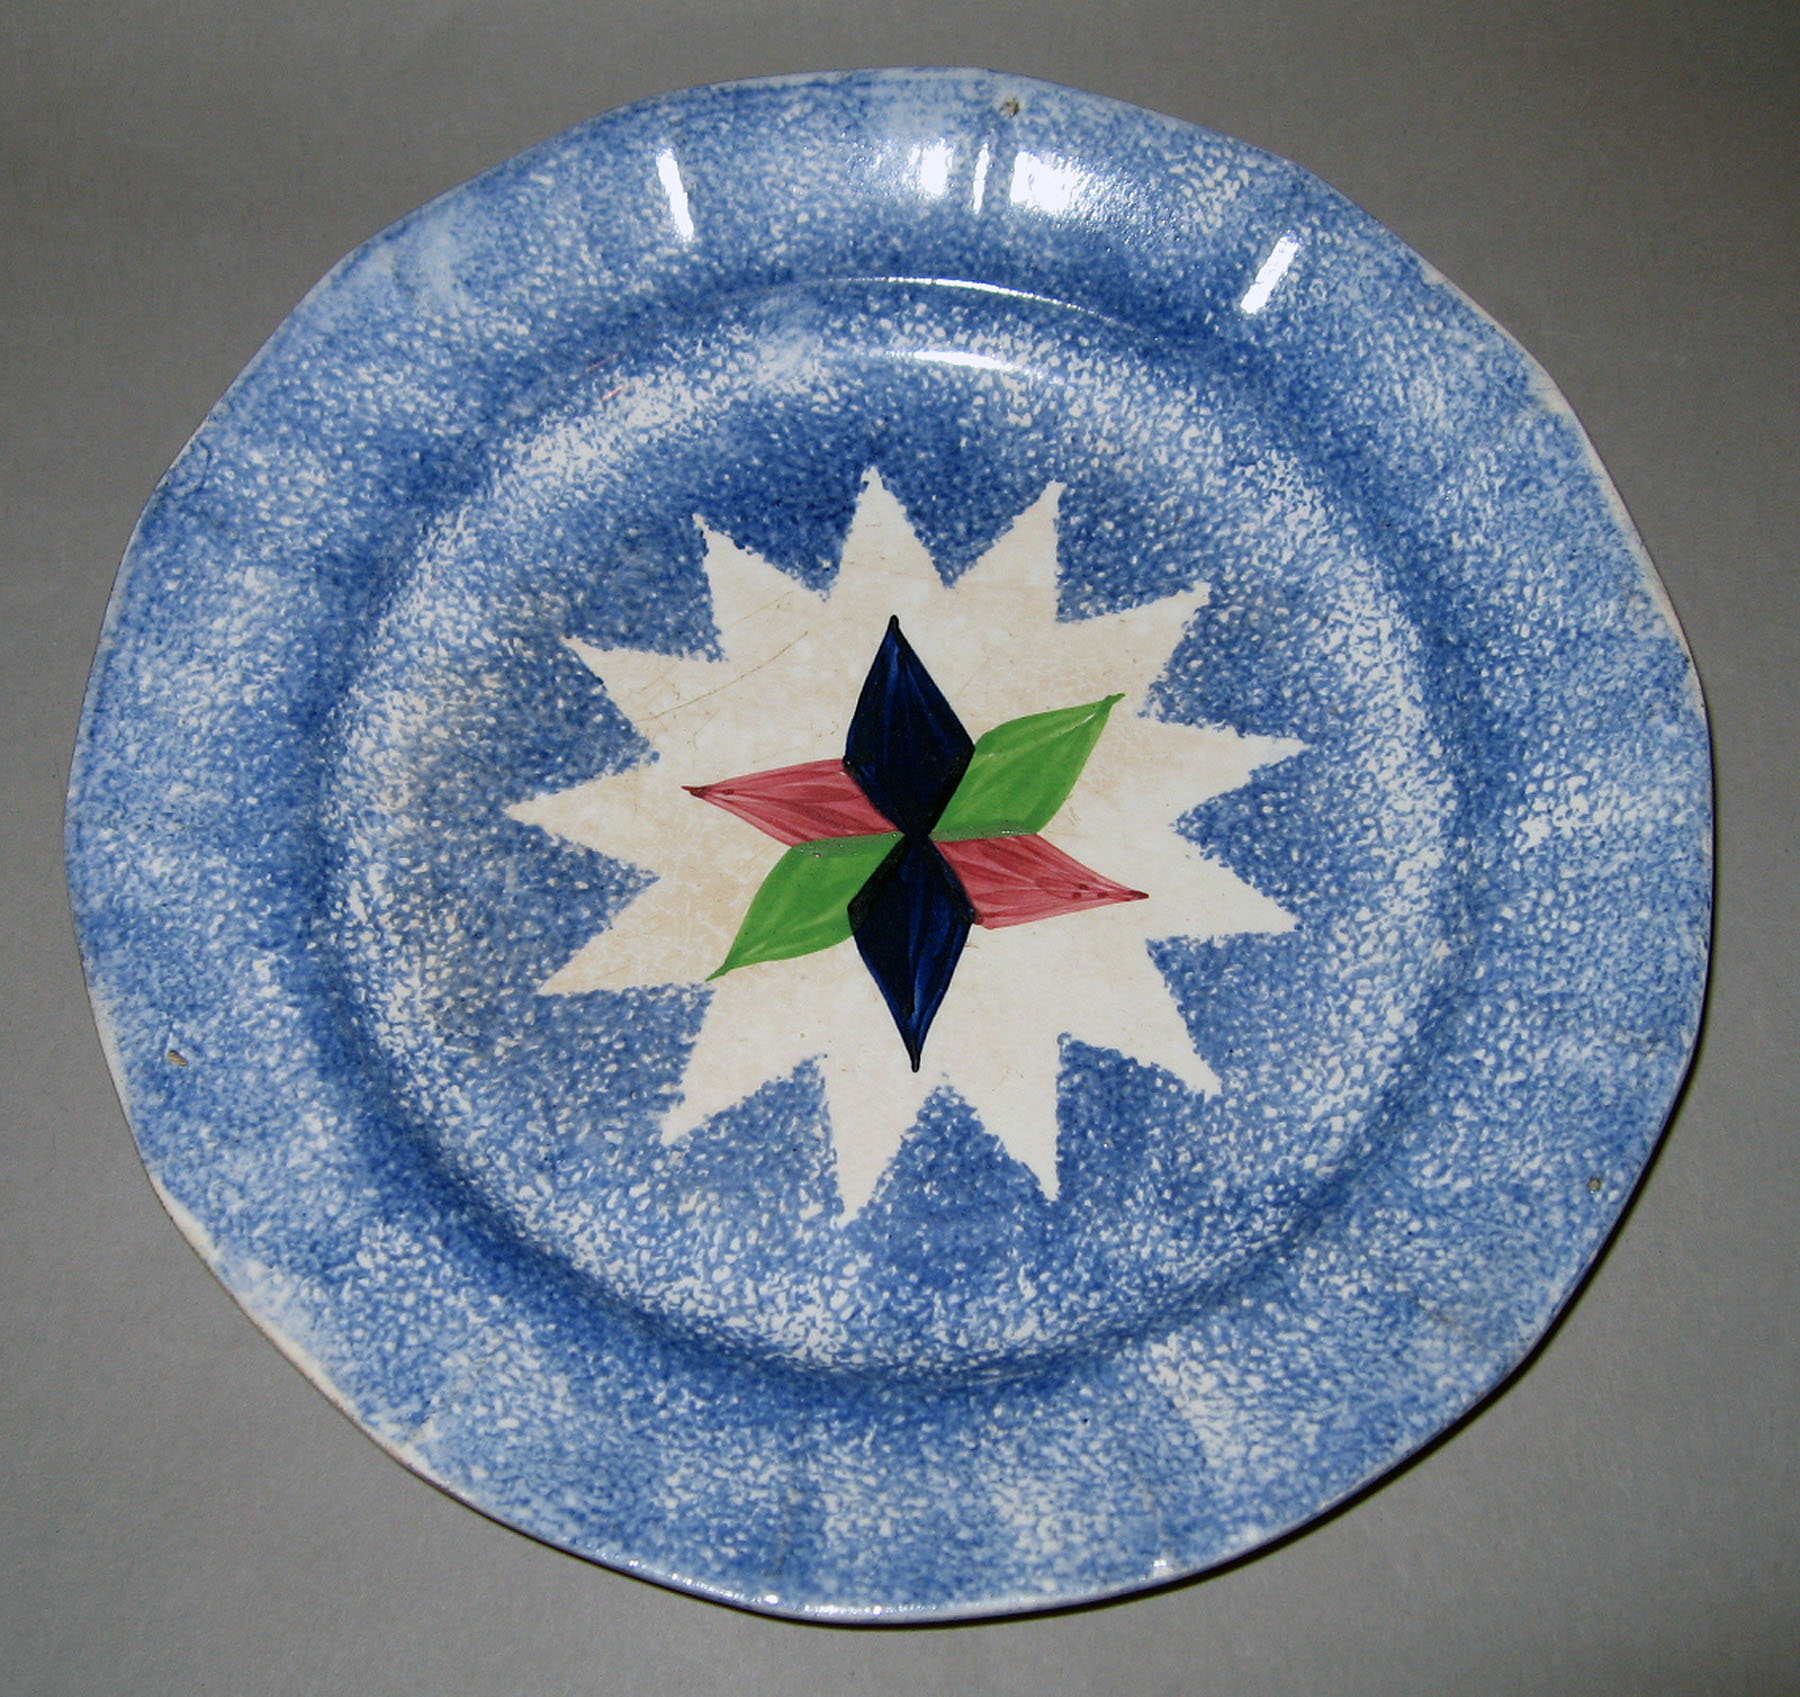 1965.0900.002 Spatterware plate